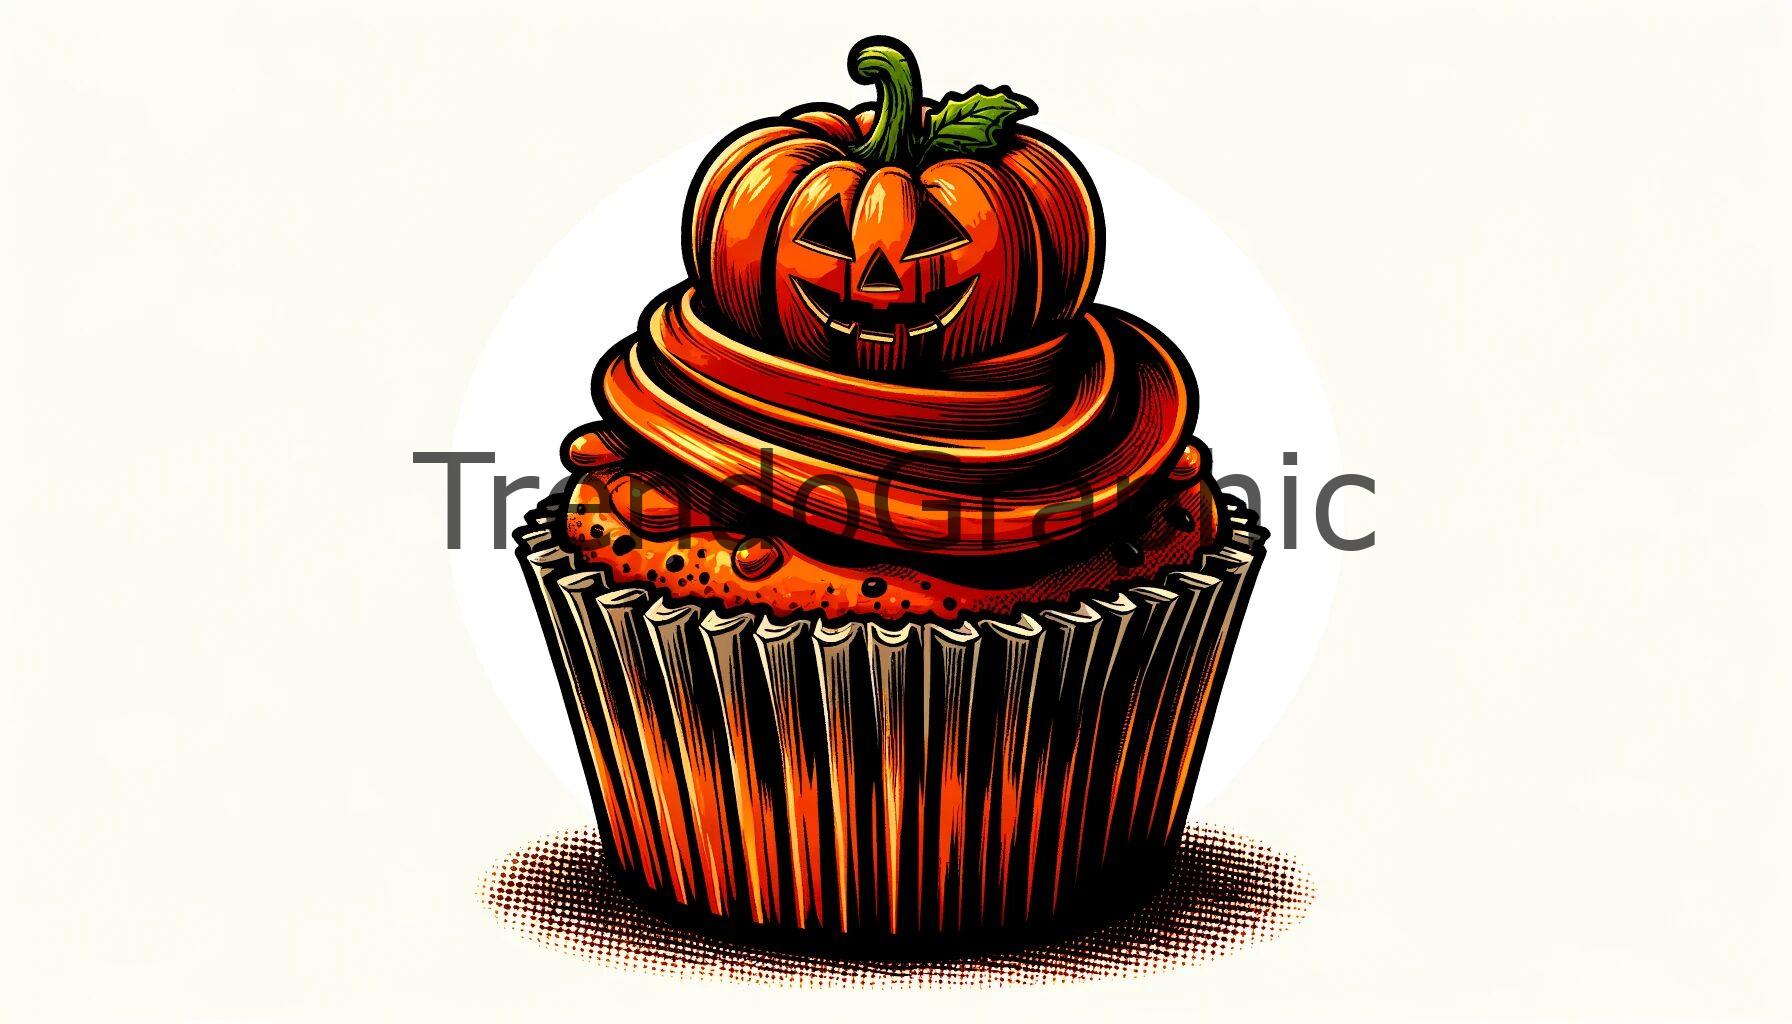 Festive Halloween Cupcake with a Fondant Pumpkin Twist